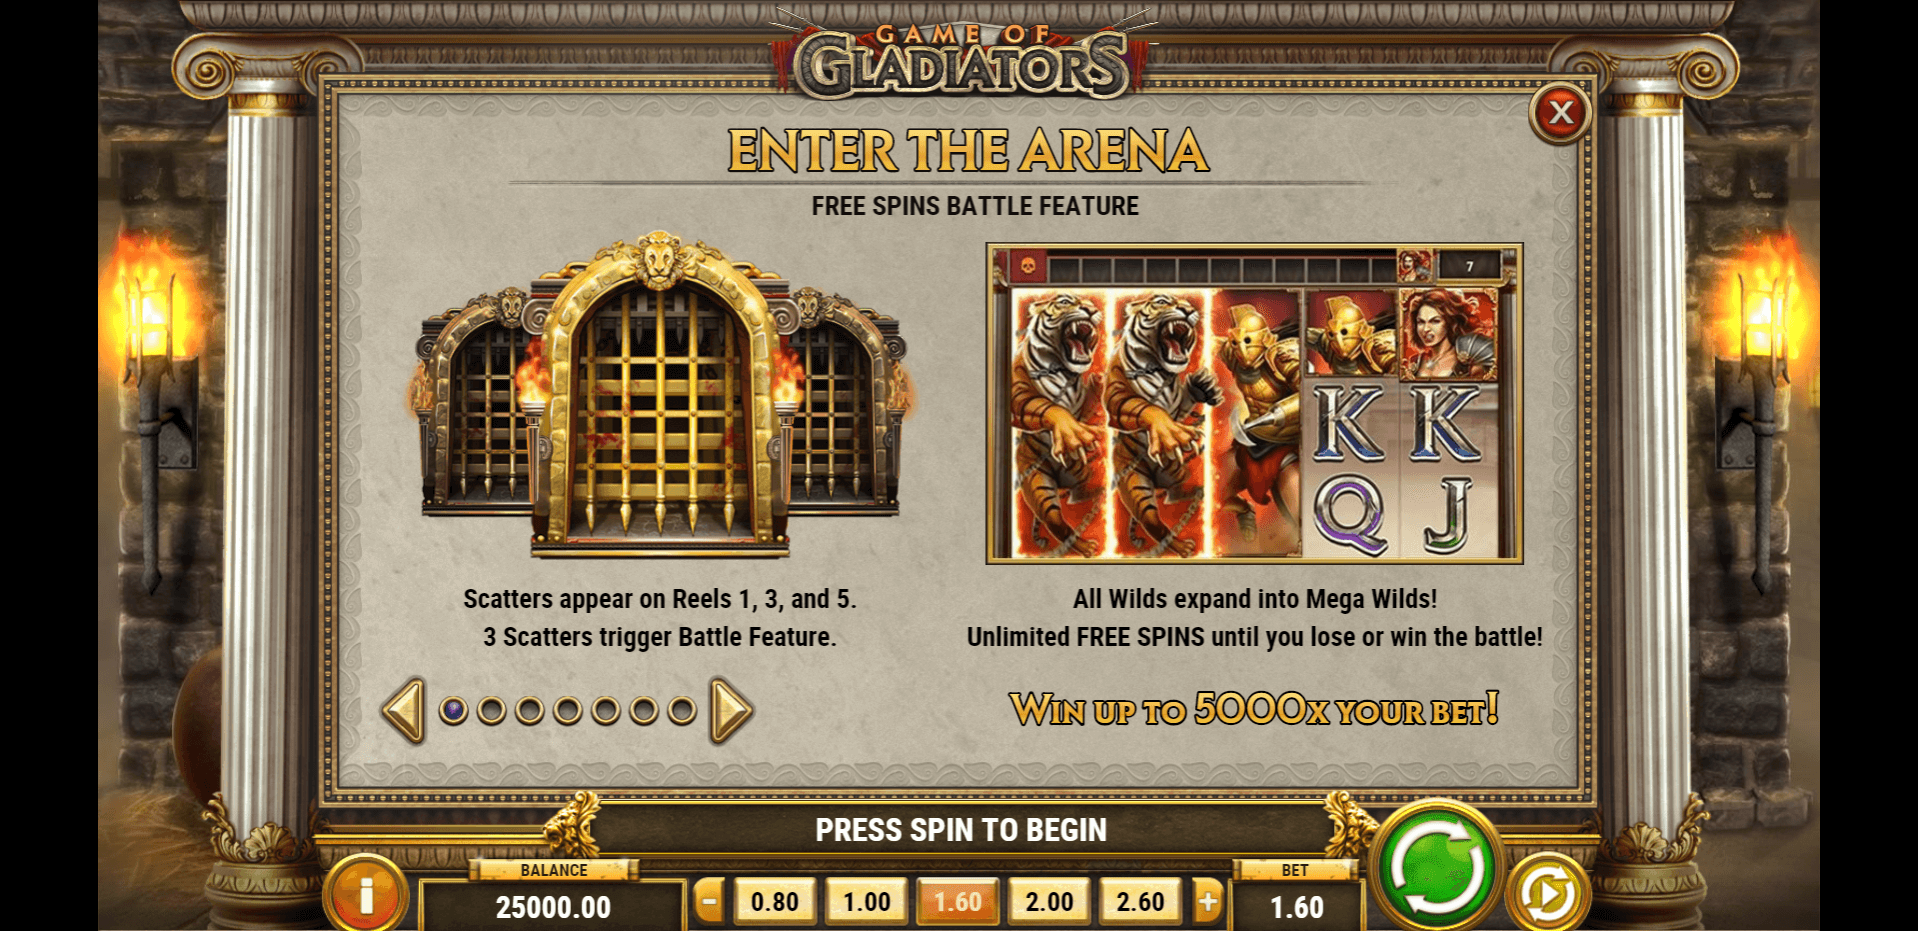 game of gladiators slot machine detail image 0